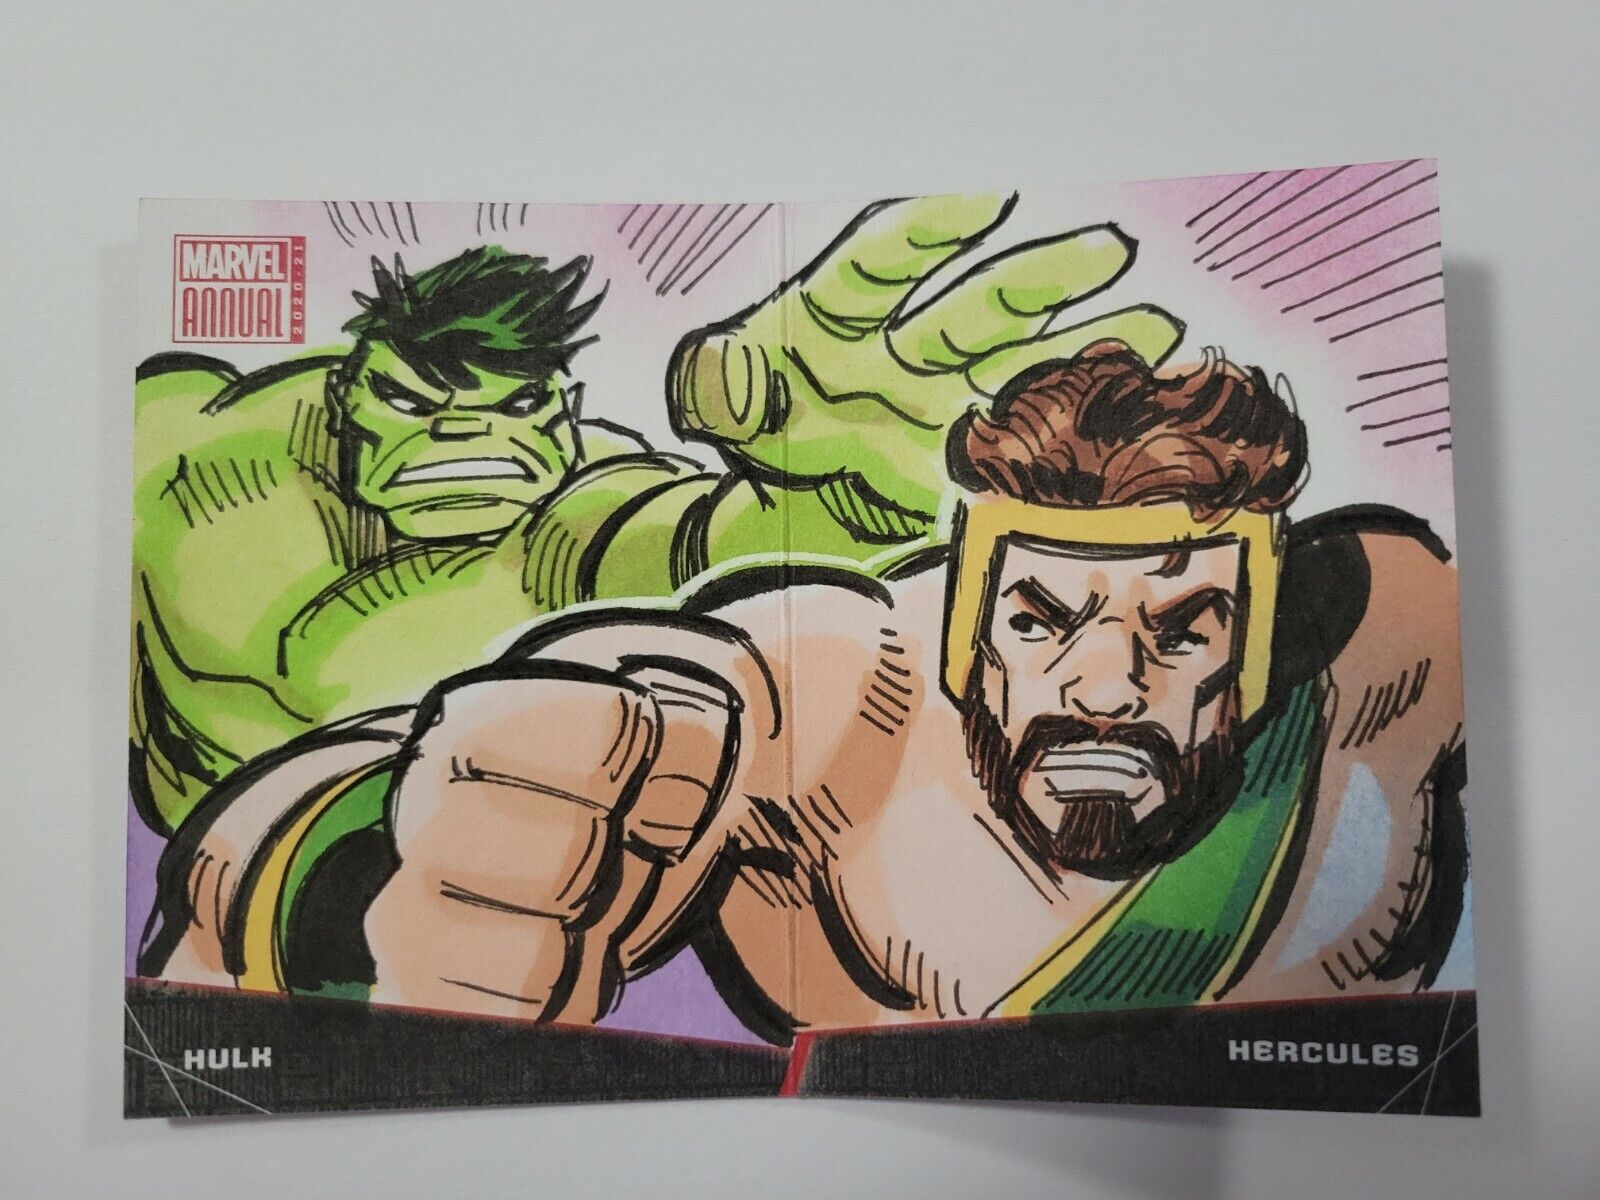 2020-21 Marvel Annual Battle Booklet Sketch Card By Tim Shinn Hulk V. Hercules